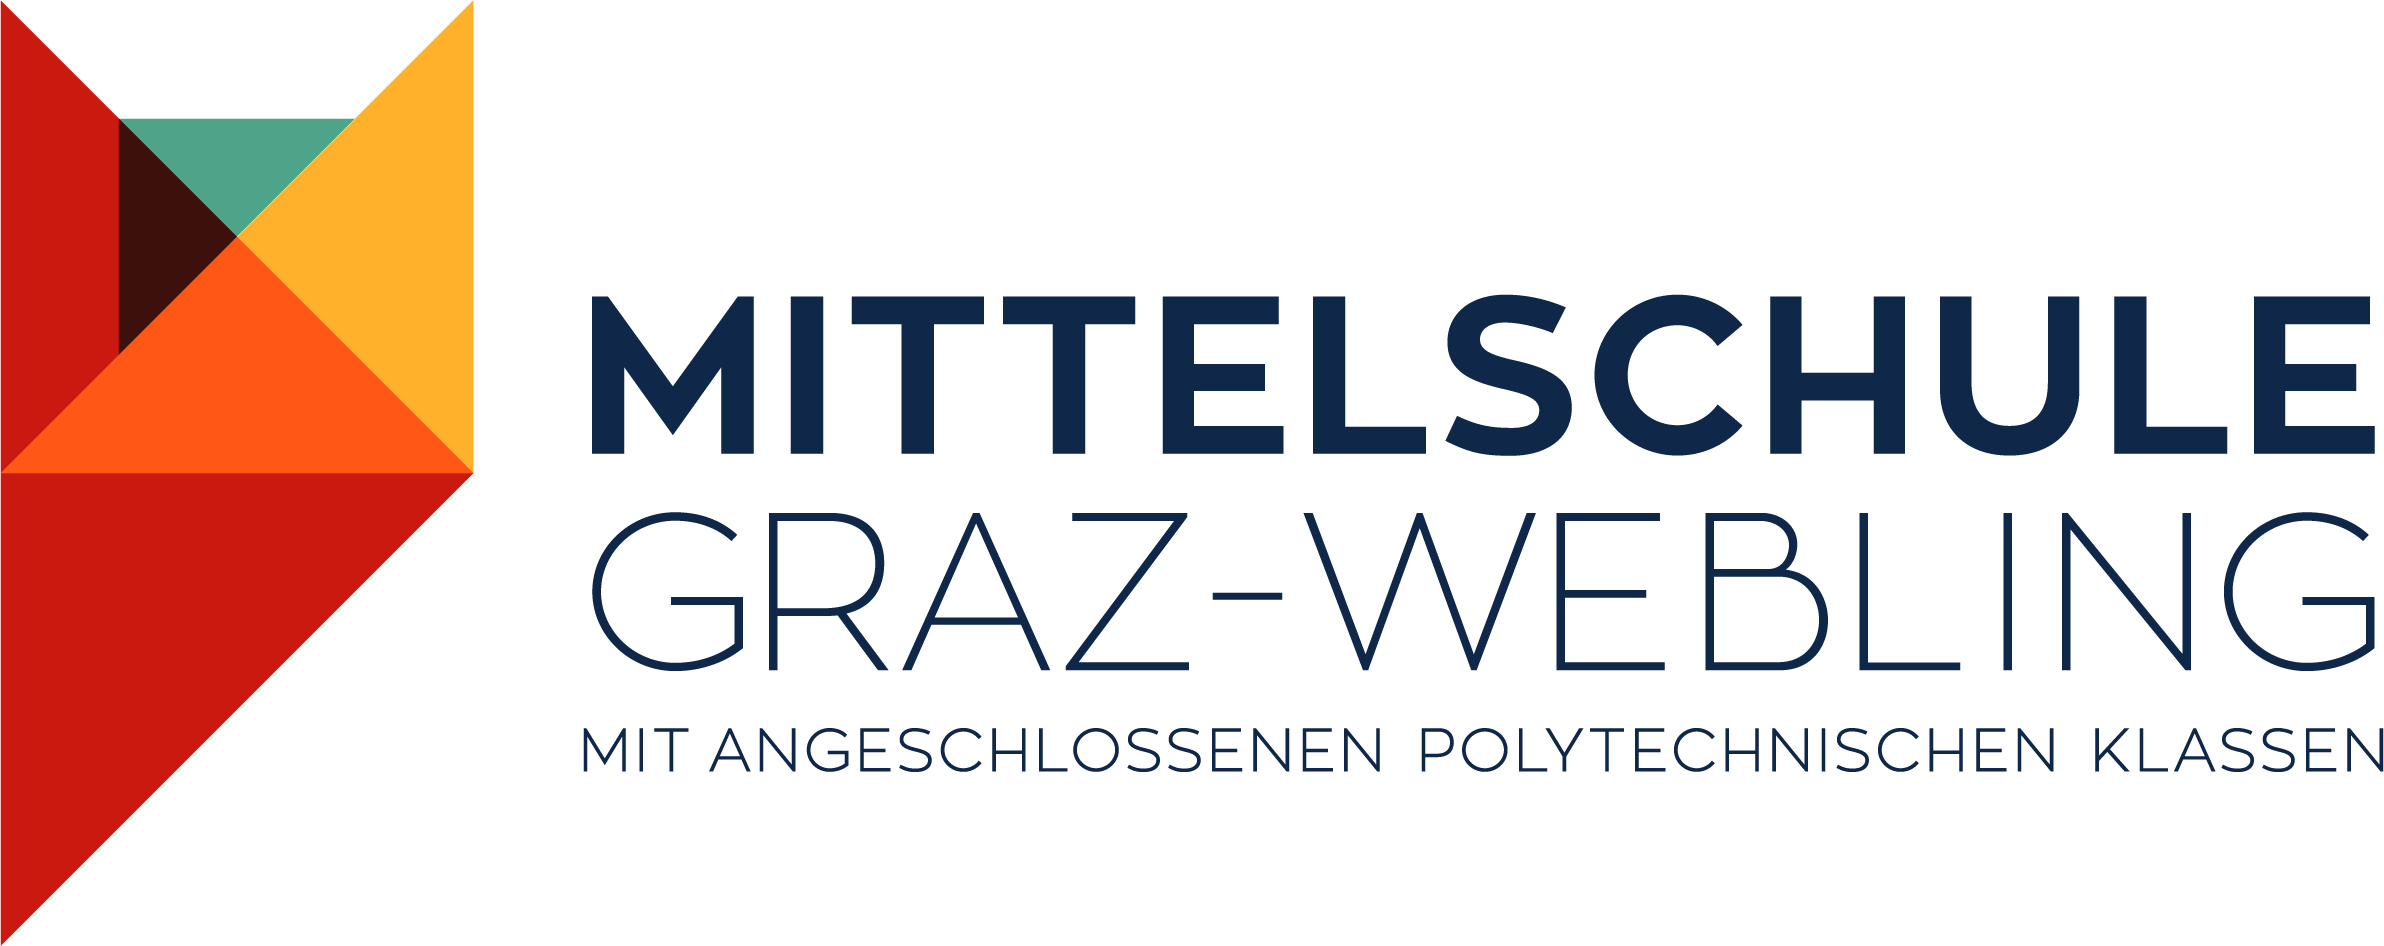 Logo der Mittelschule Graz-Webling mit angeschlossenen Polytechnischen Klassen